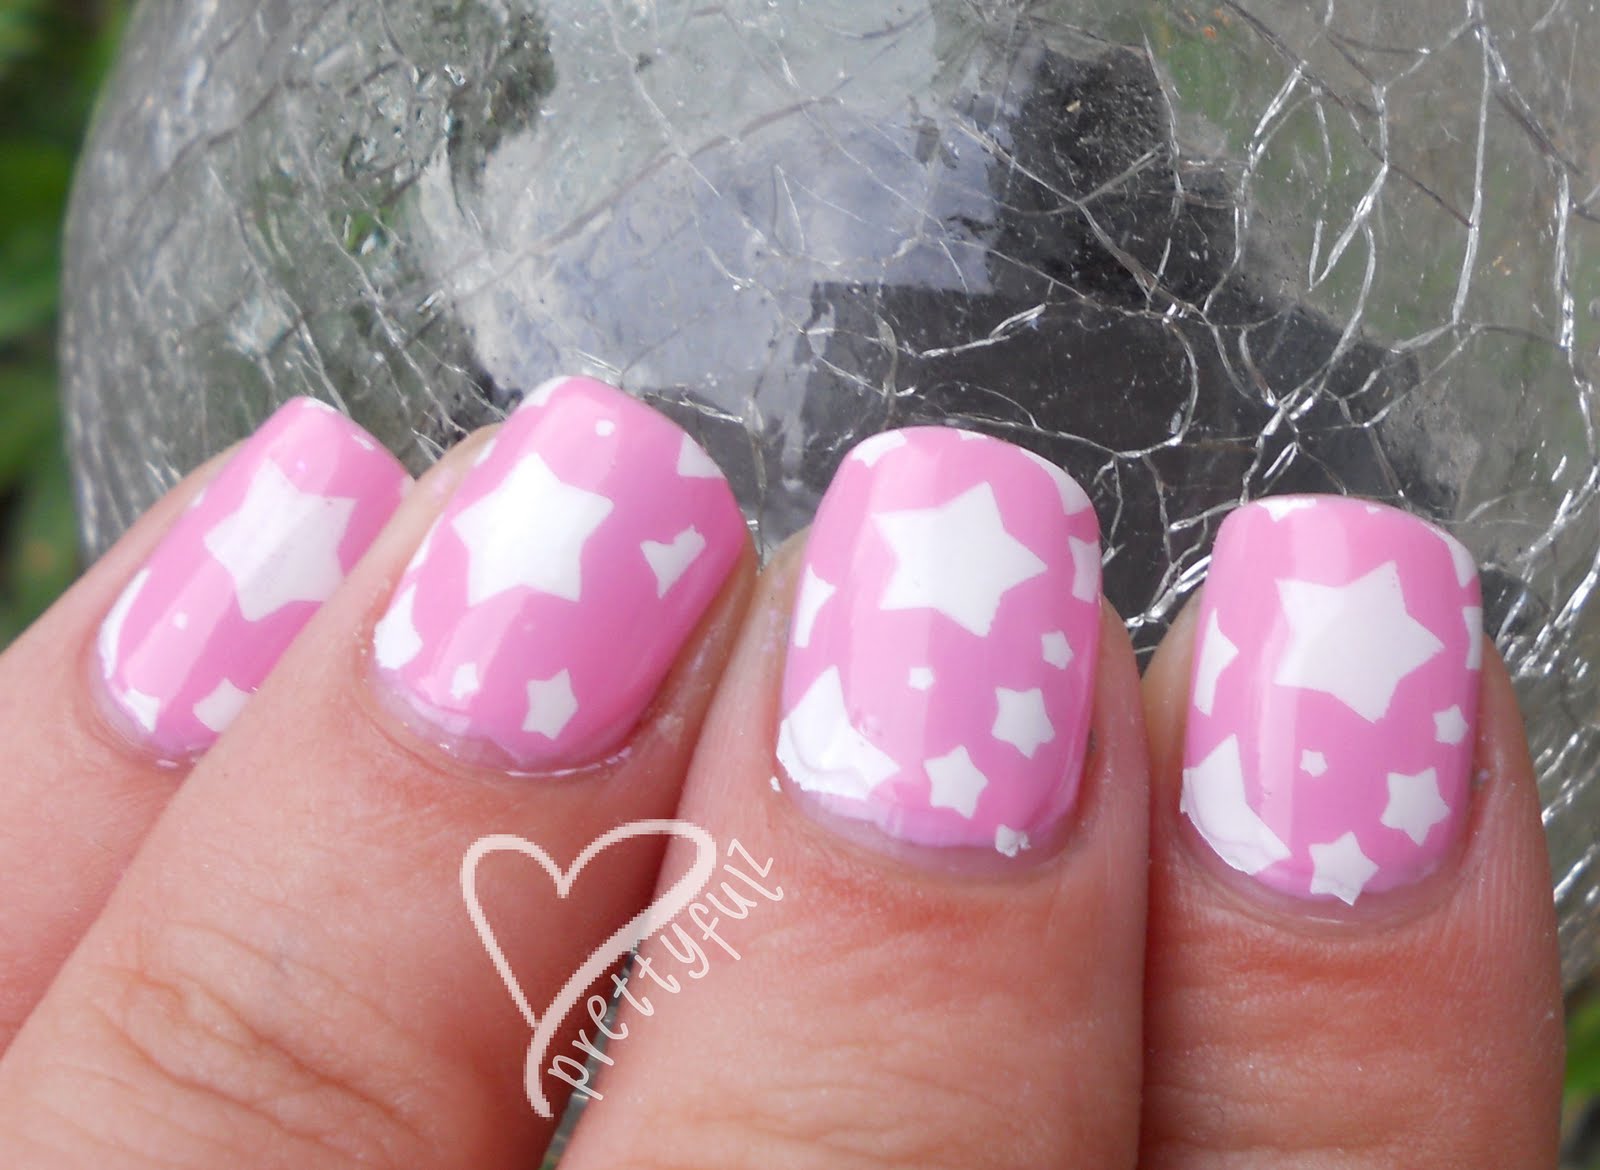 Super Cute Pink & White Star Nail Art Design for short nails!